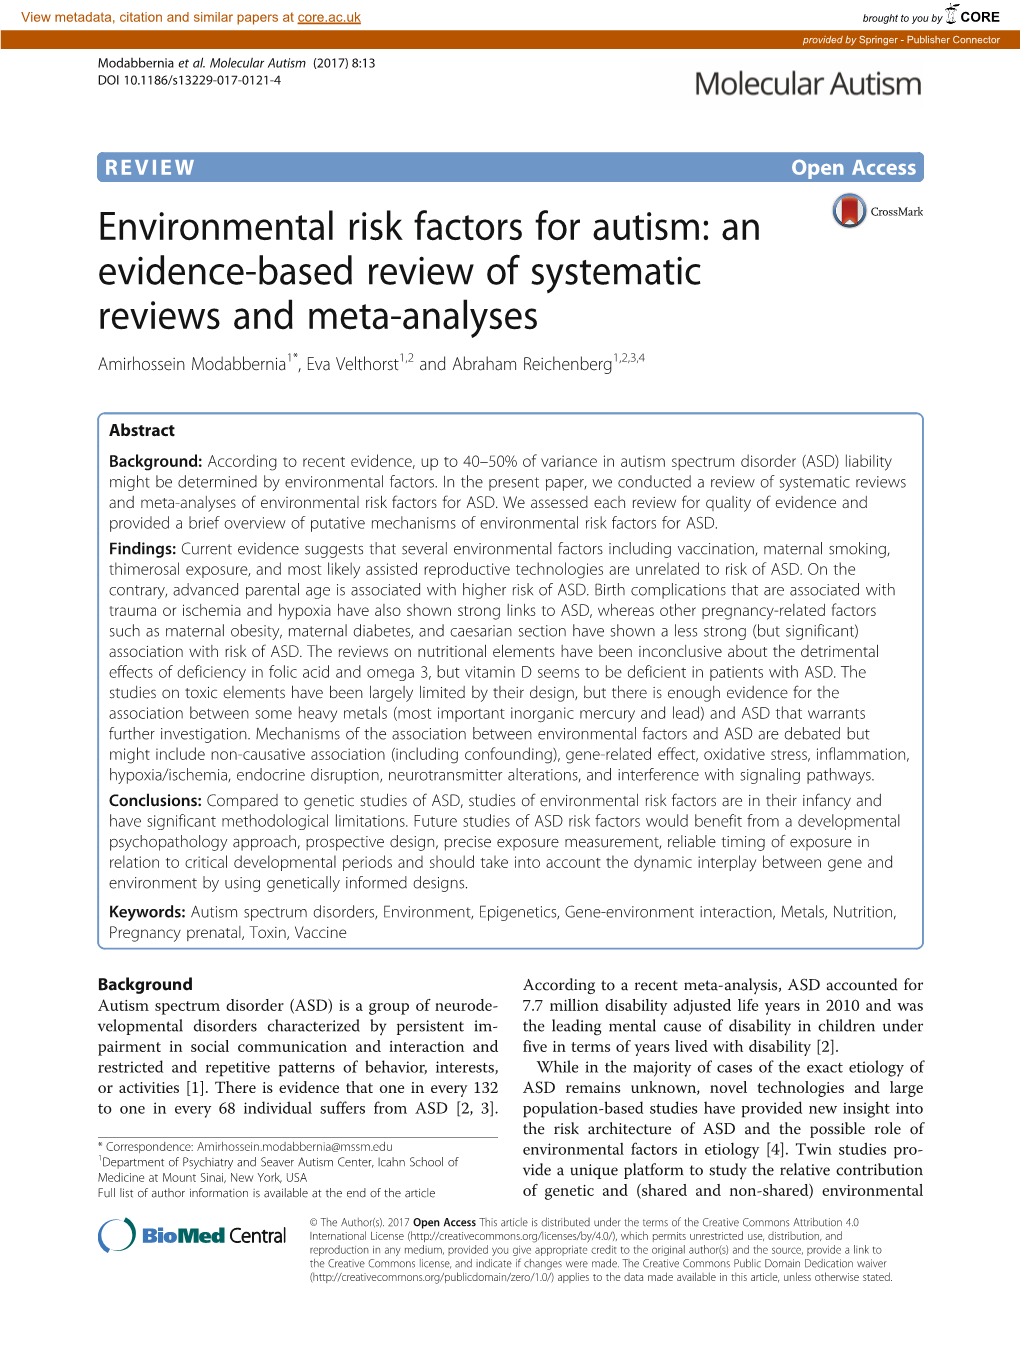 Environmental Risk Factors for Autism